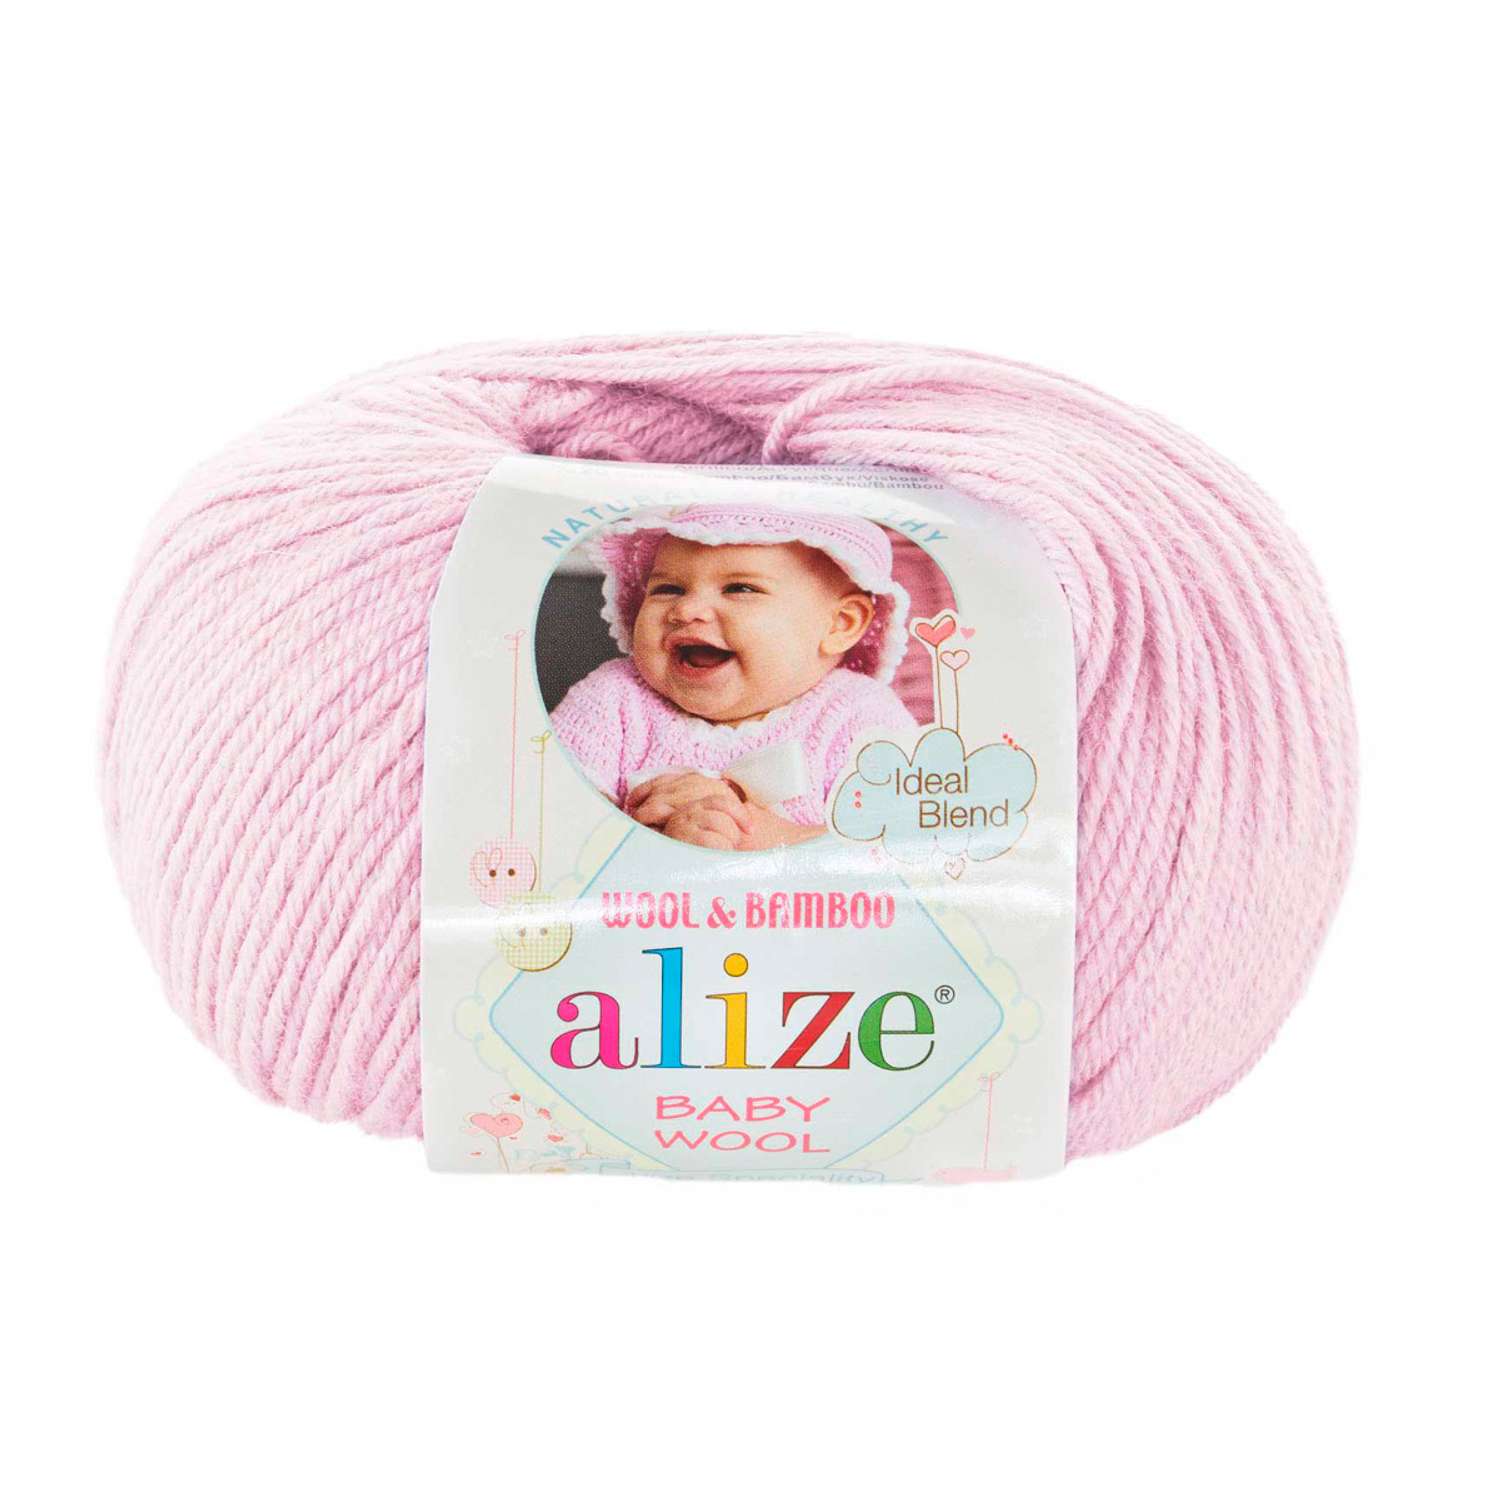 Пряжа для вязания Alize baby wool бамбук шерсть акрил мягкая 50 гр 175 м 275 сиреневая пудра 10 мотков - фото 3